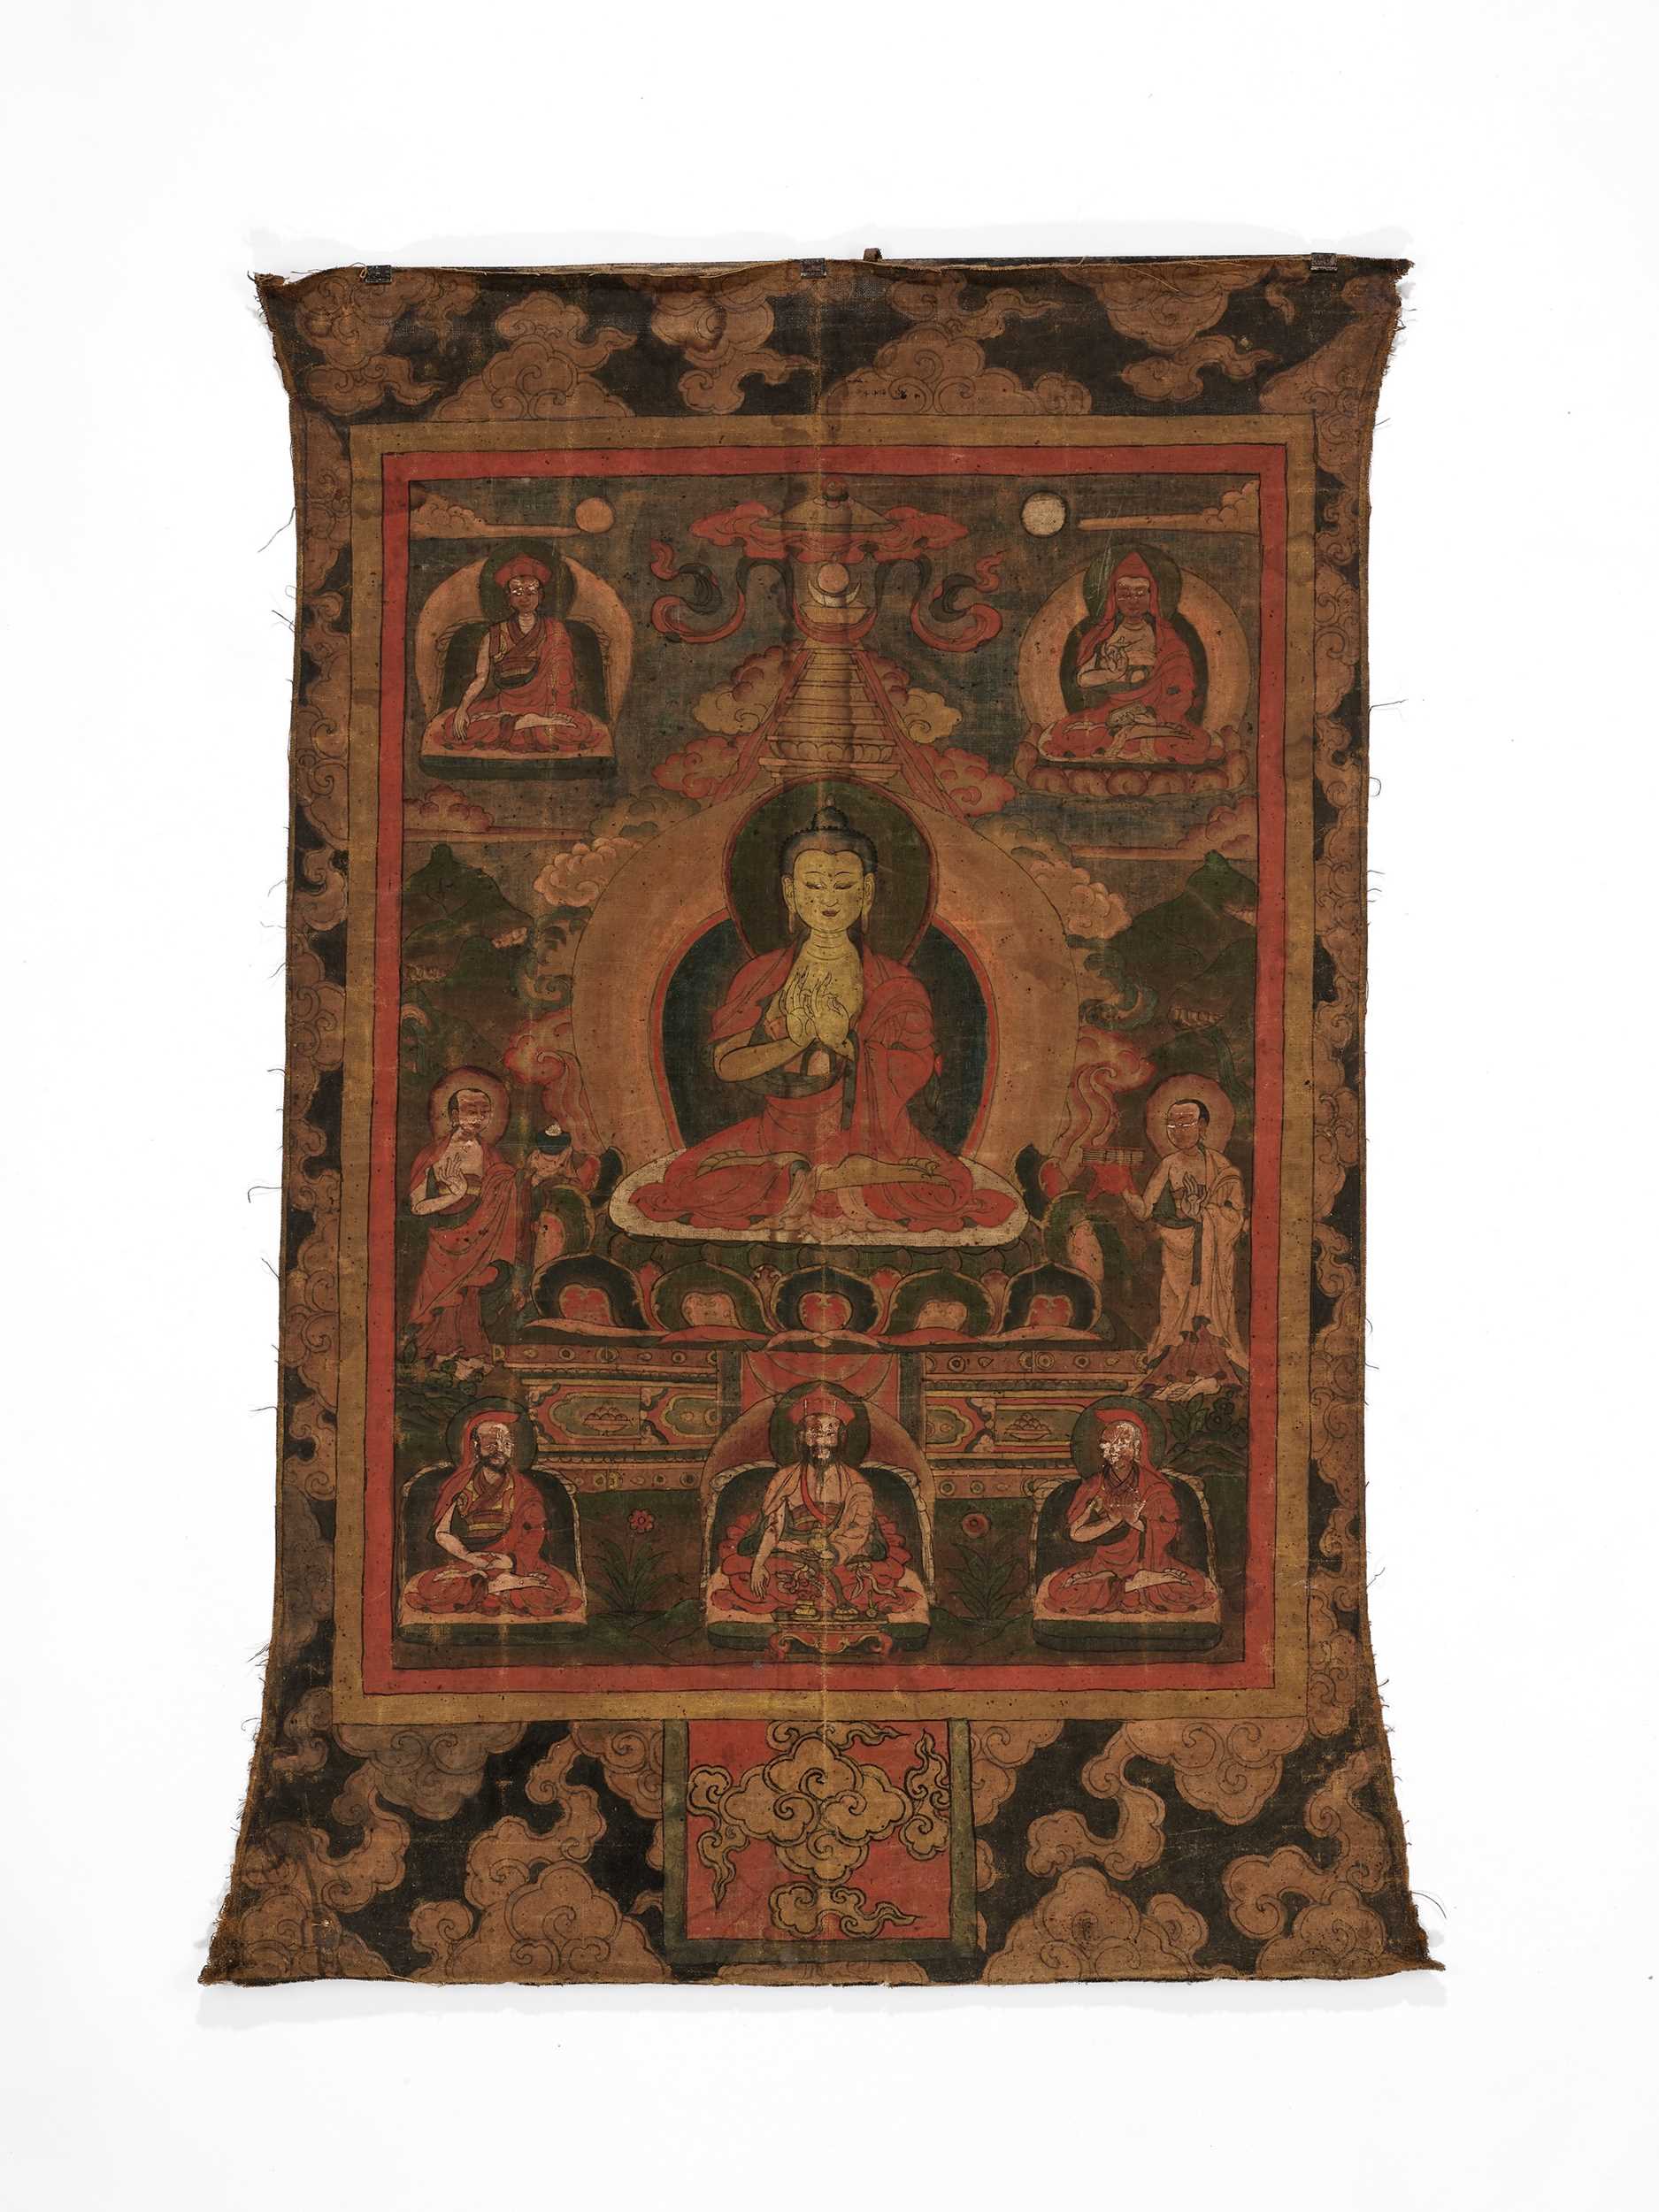 Lot 447 - A TIBETAN THANGKA DEPICTING BUDDHA SHAKYAMUNI, 19TH CENTURY